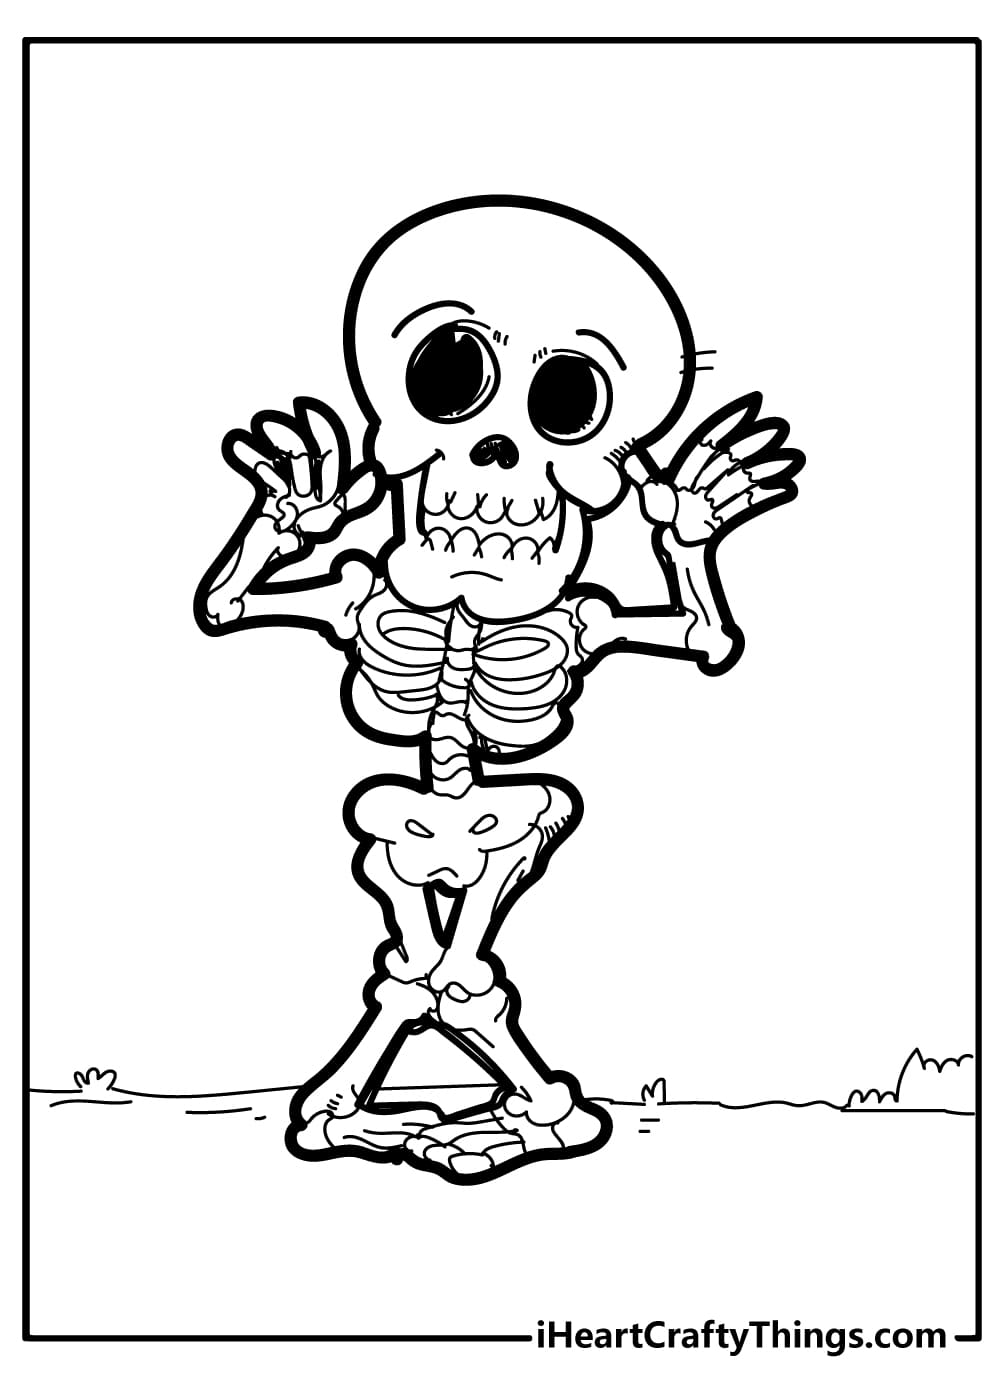 Skeleton Coloring Page Imagge Skeleton Coloring Page Imagge